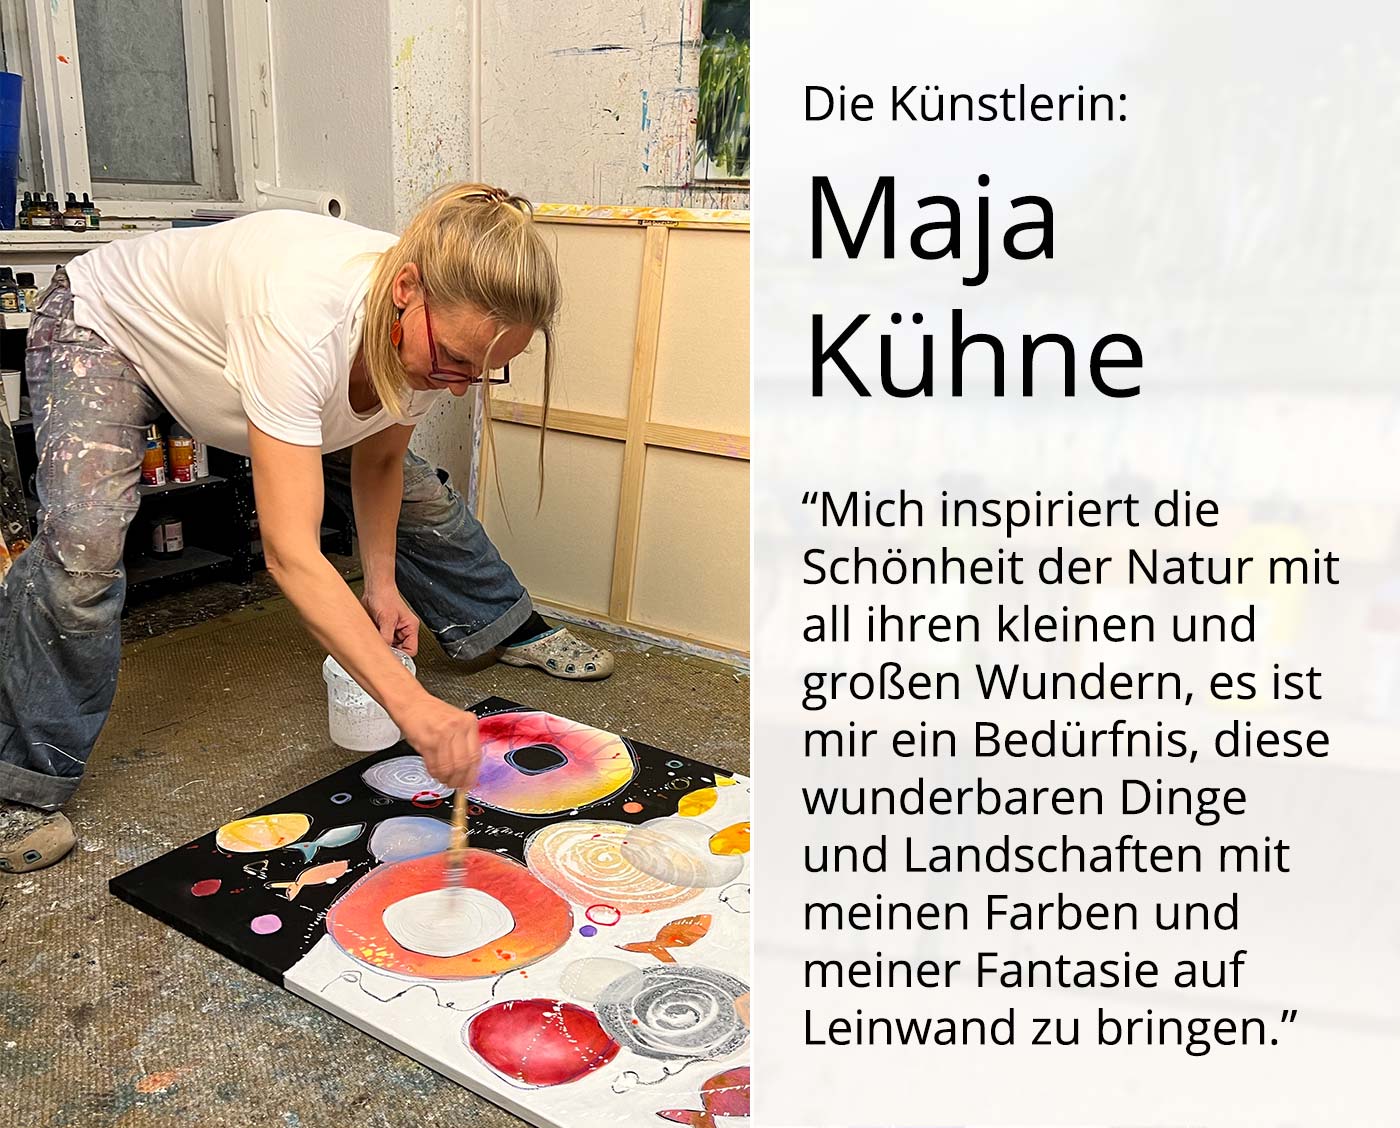 M. Kühne: "Im Frühlingslicht", Sonderedition, Monatsgemälde als Kunstdruck